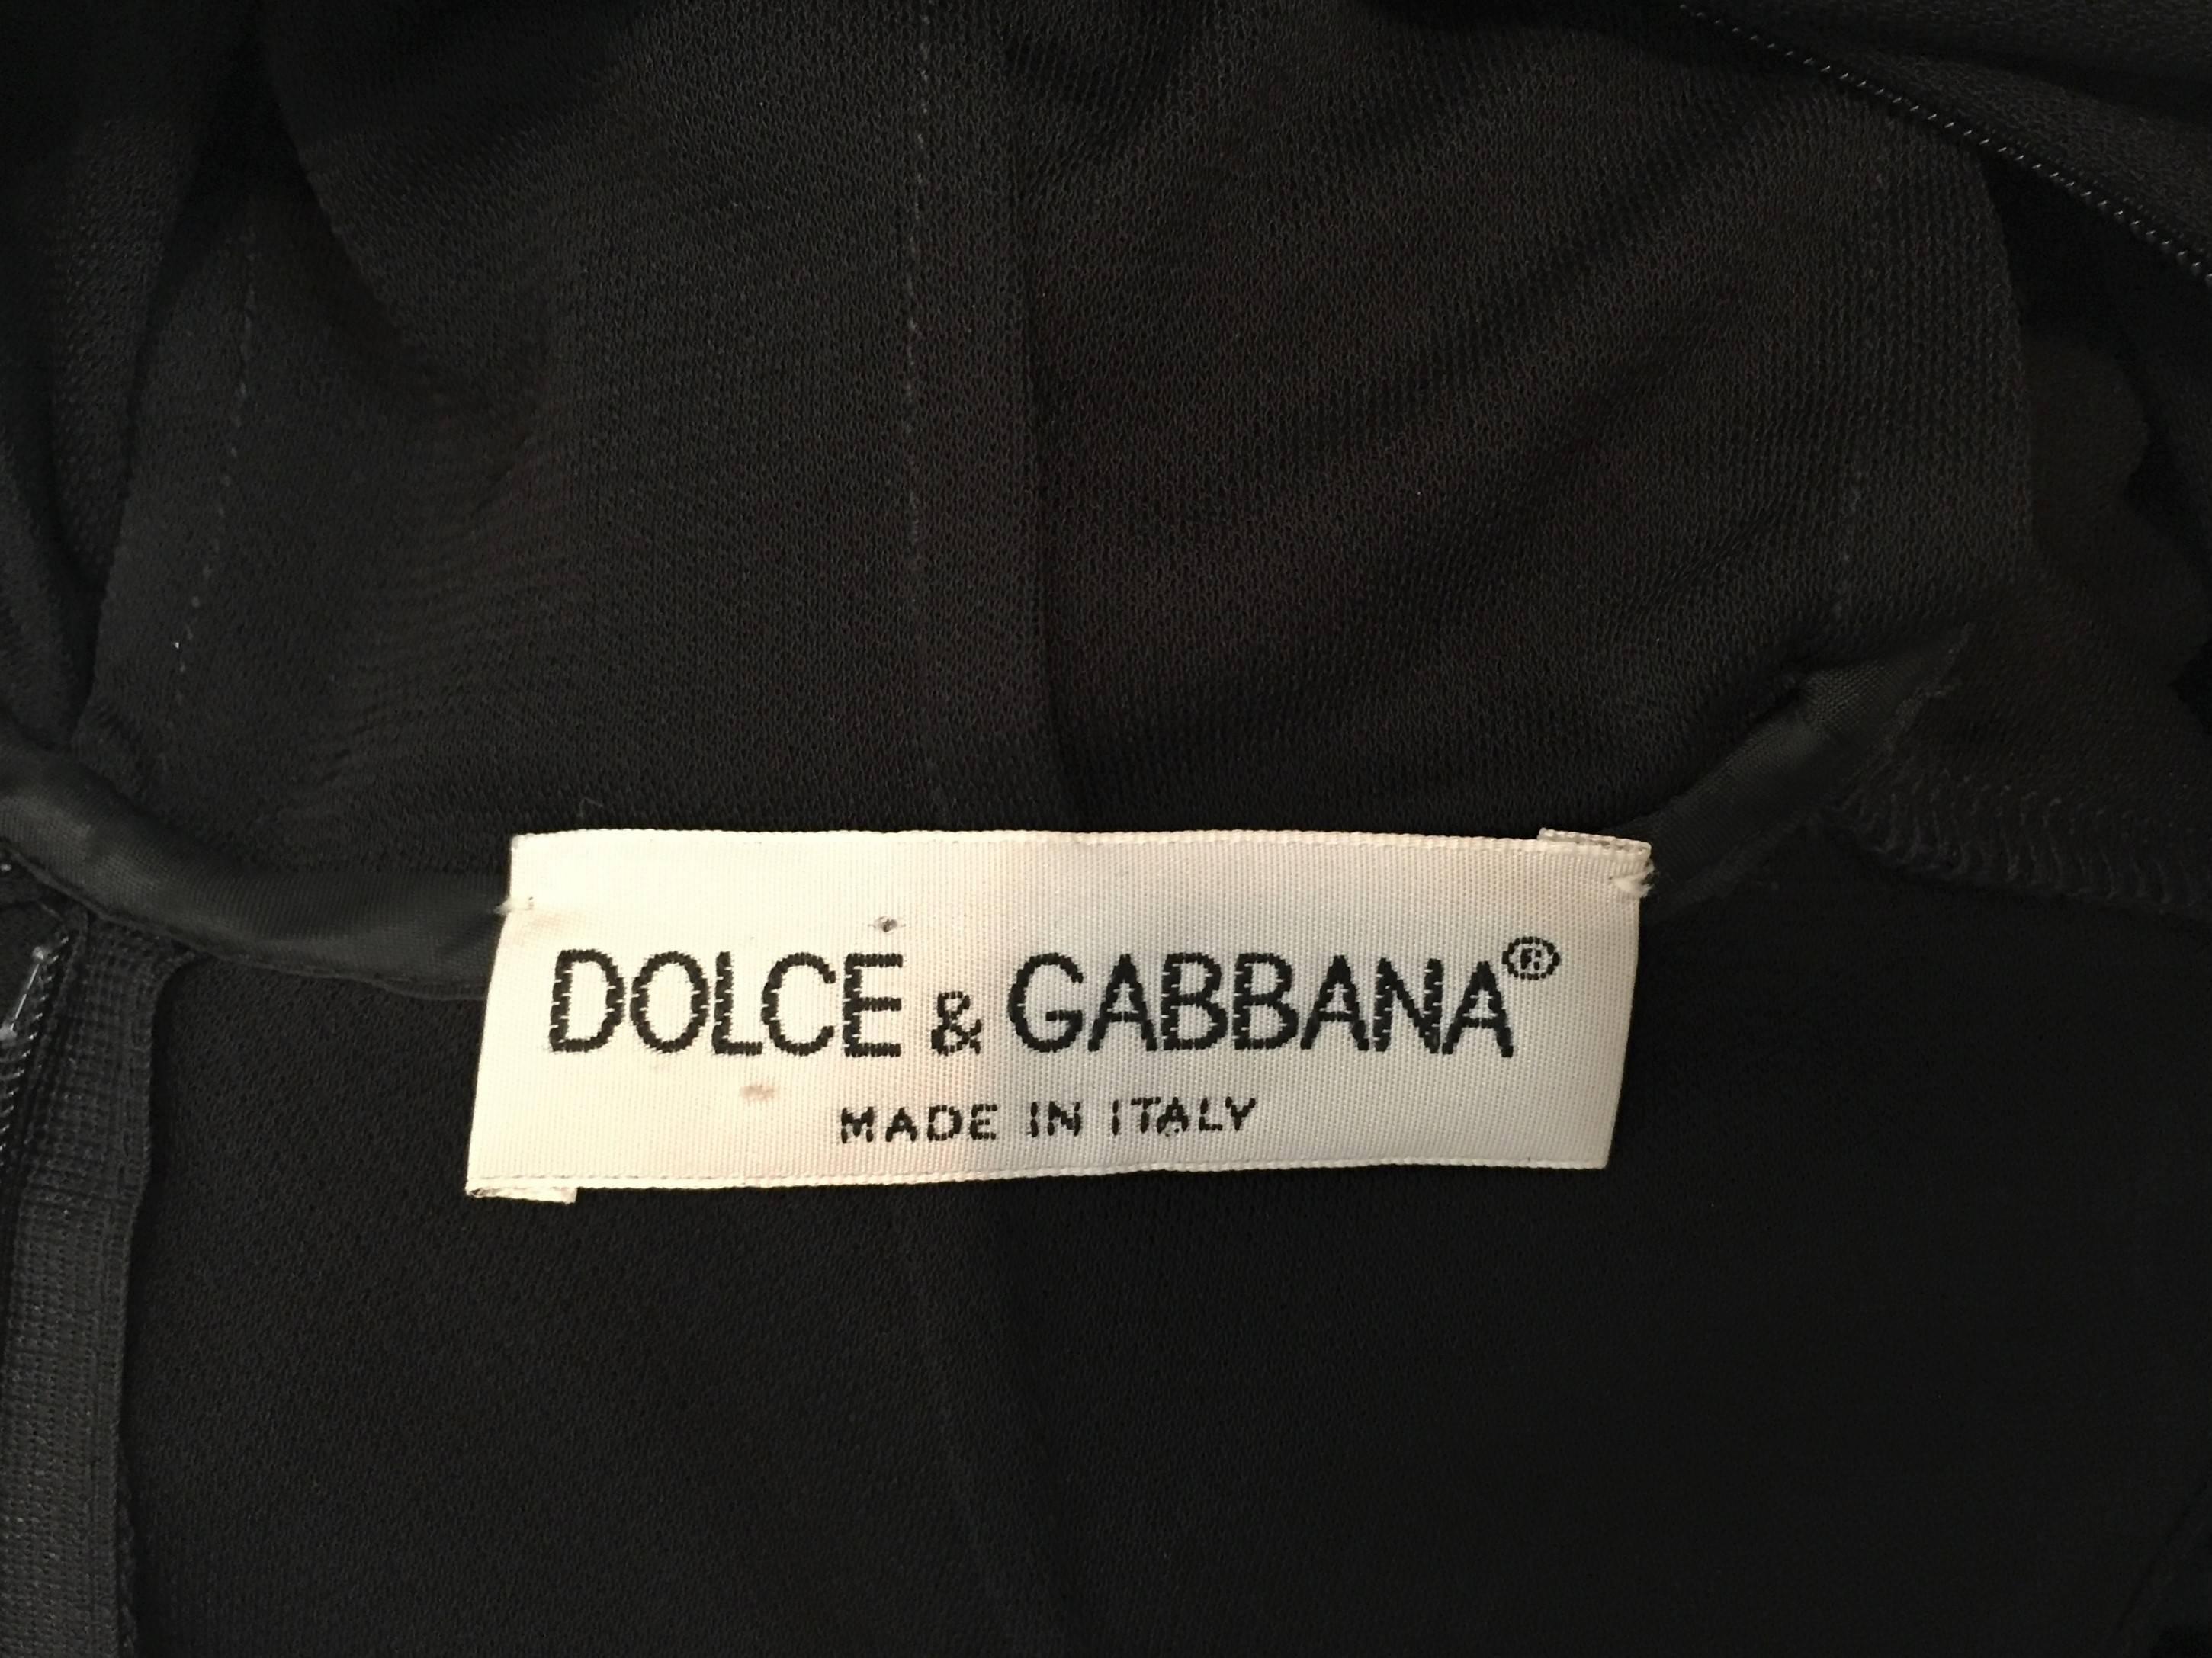 Women's S/S 1996 Dolce & Gabbana Runway Black Sheer Hooded Dress